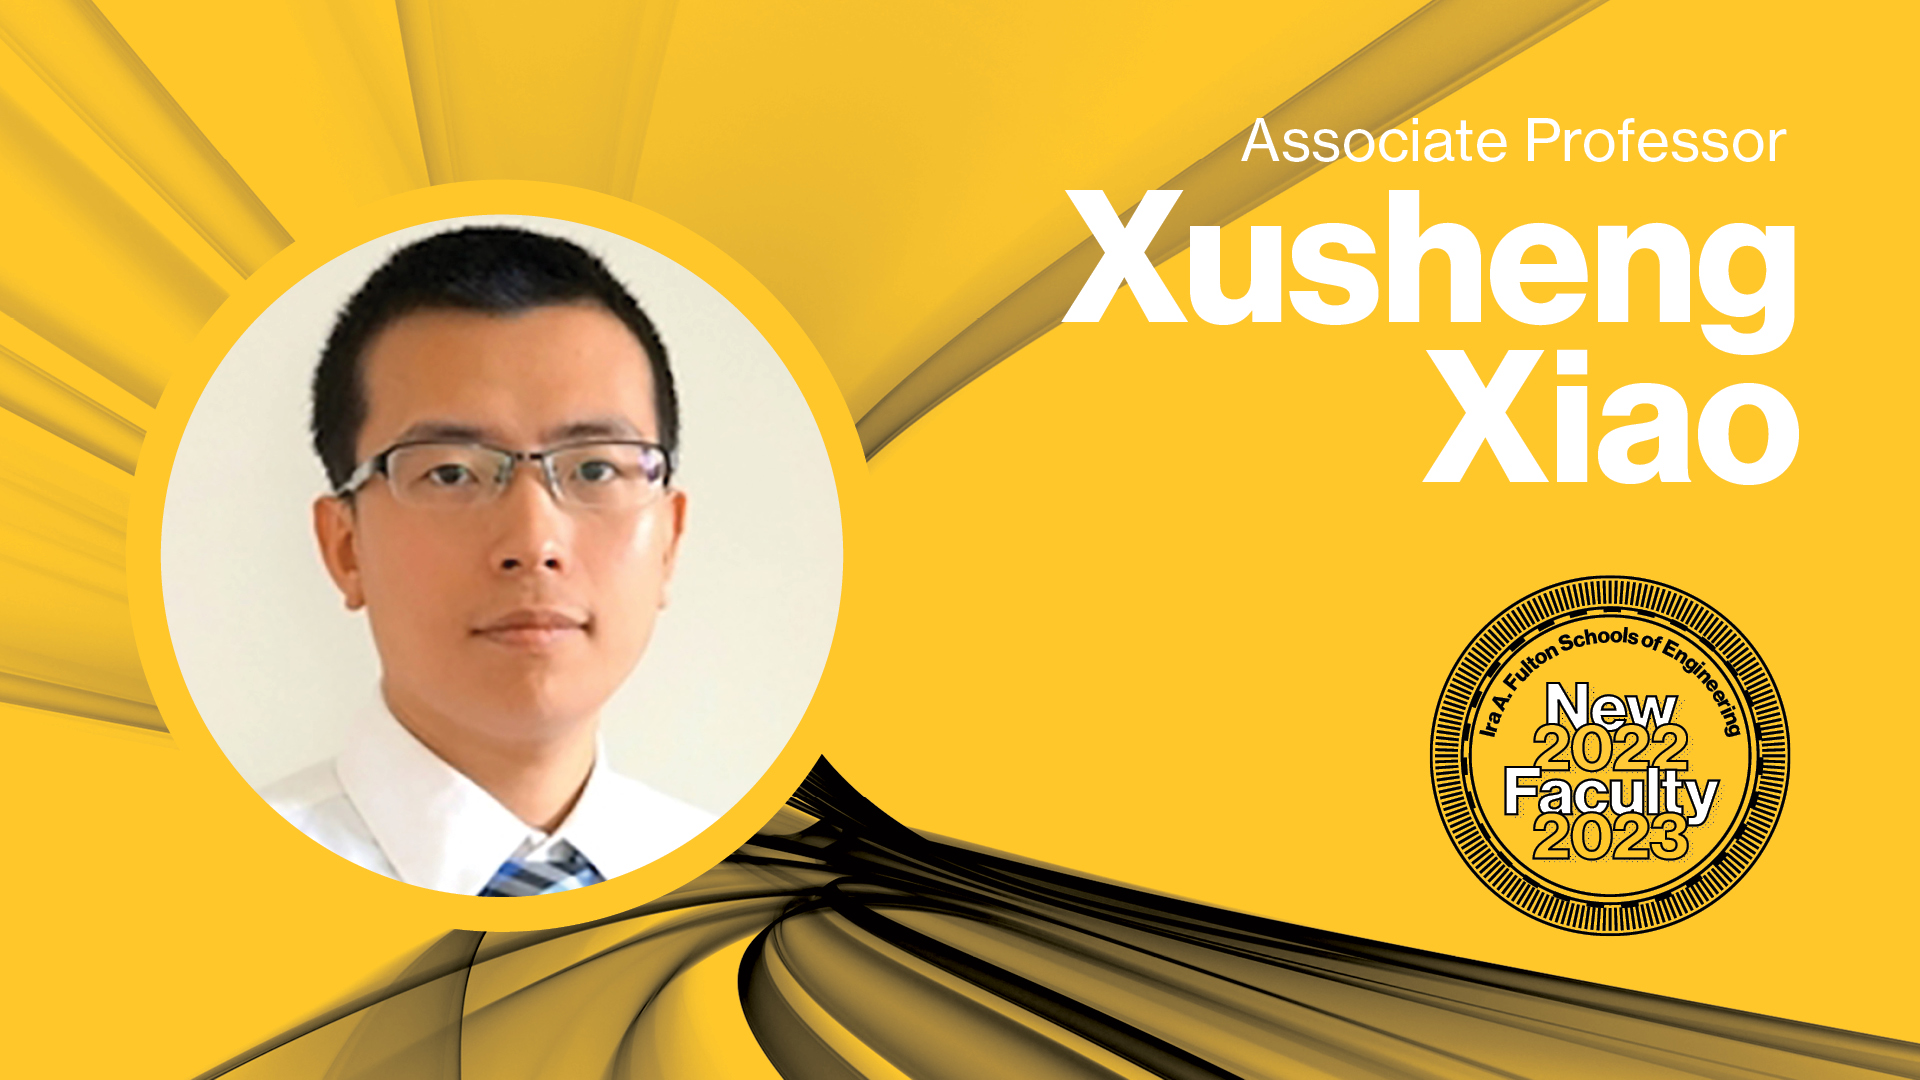 Associate Professor Xusheng Xiao, Ira A. Fulton Schools of Engineering New Faculty 2022-2023 with a headshot